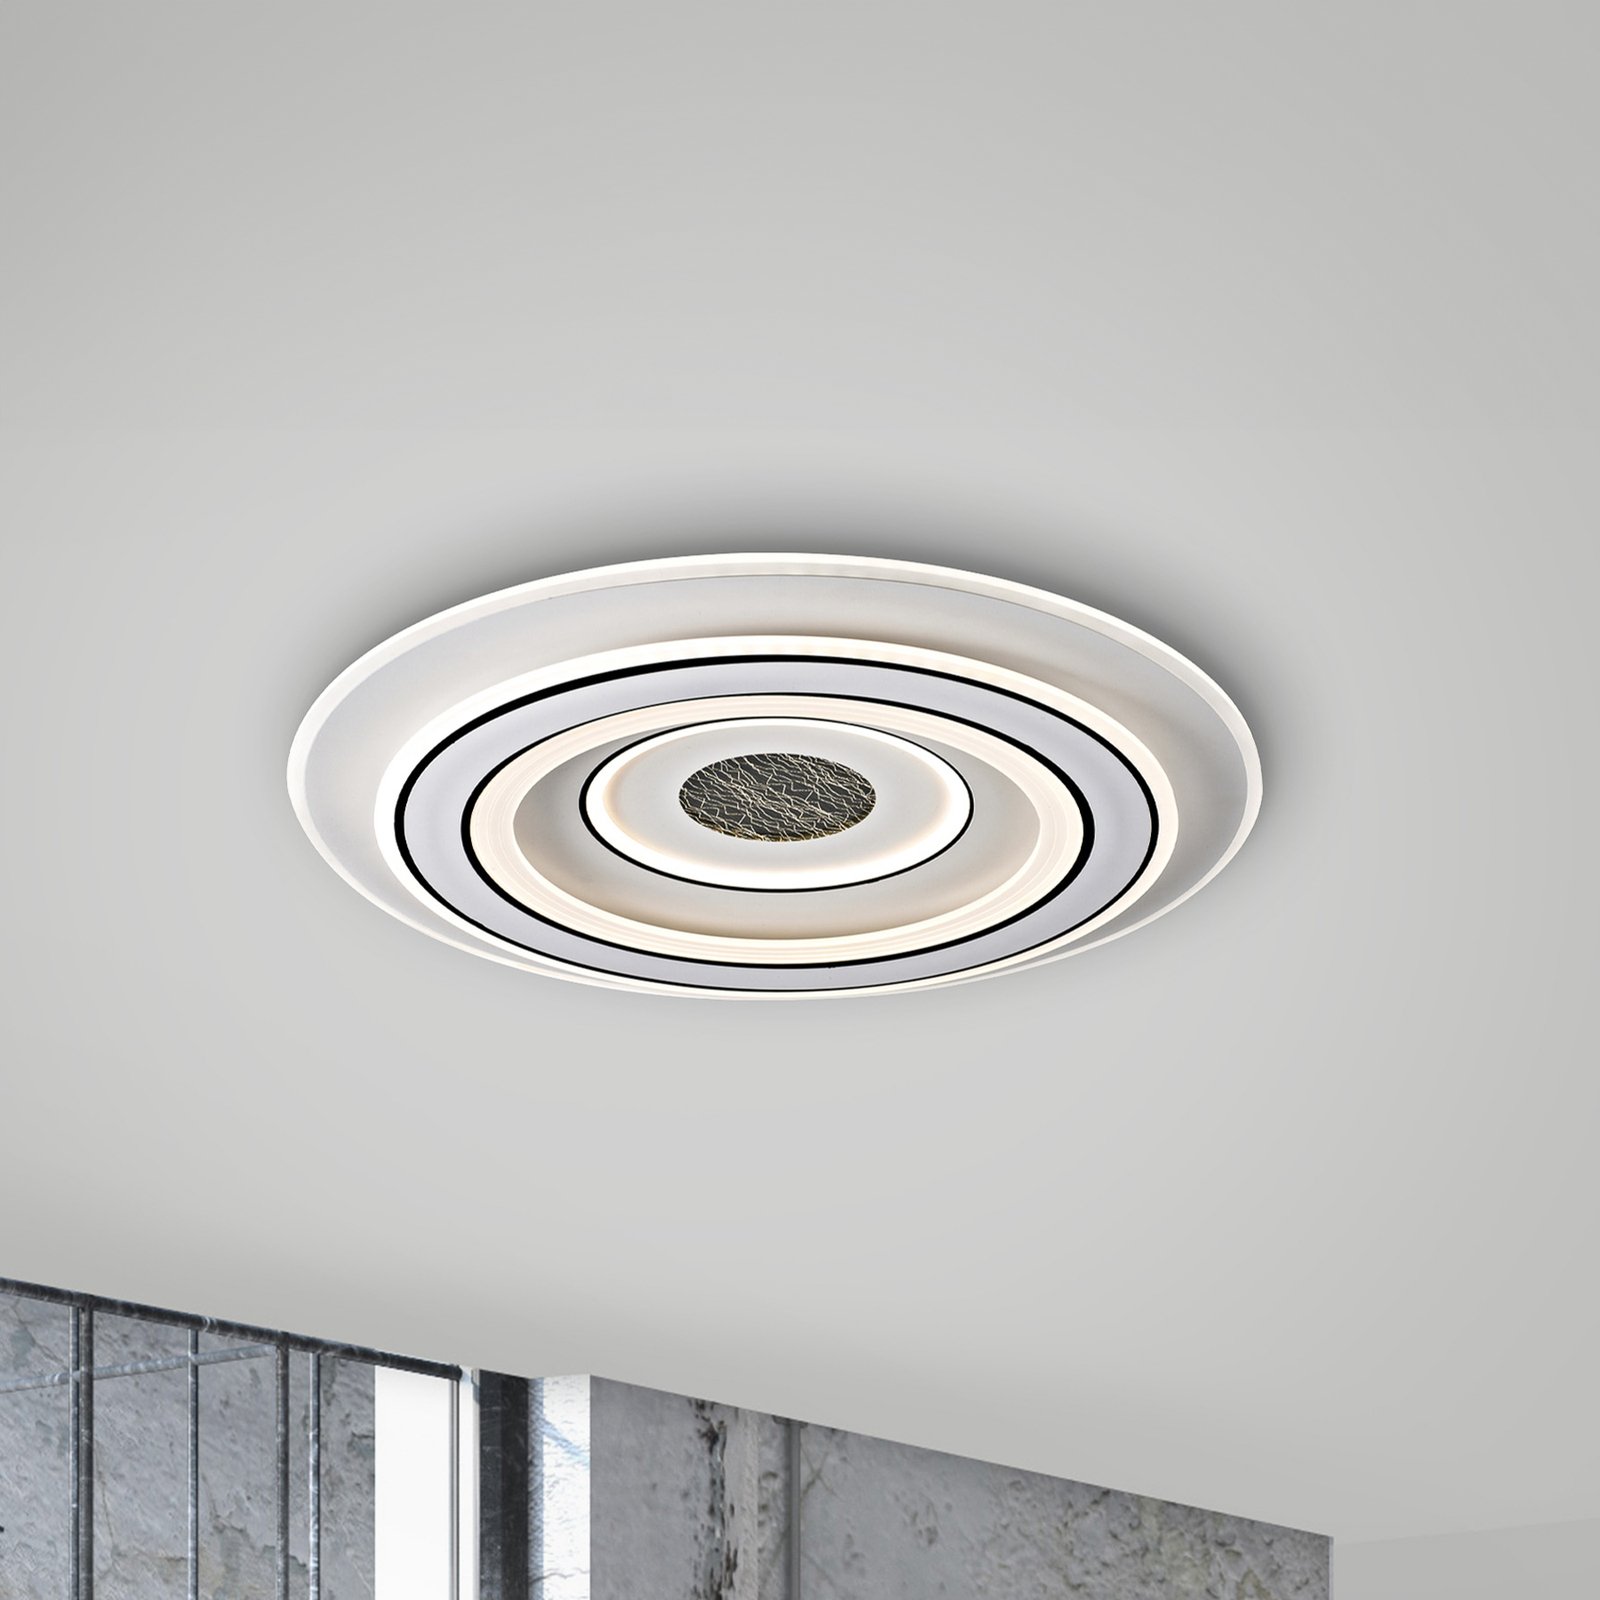 JUST LIGHT. LED ceiling light Tolago, Ø 40 cm, CCT, dimmable